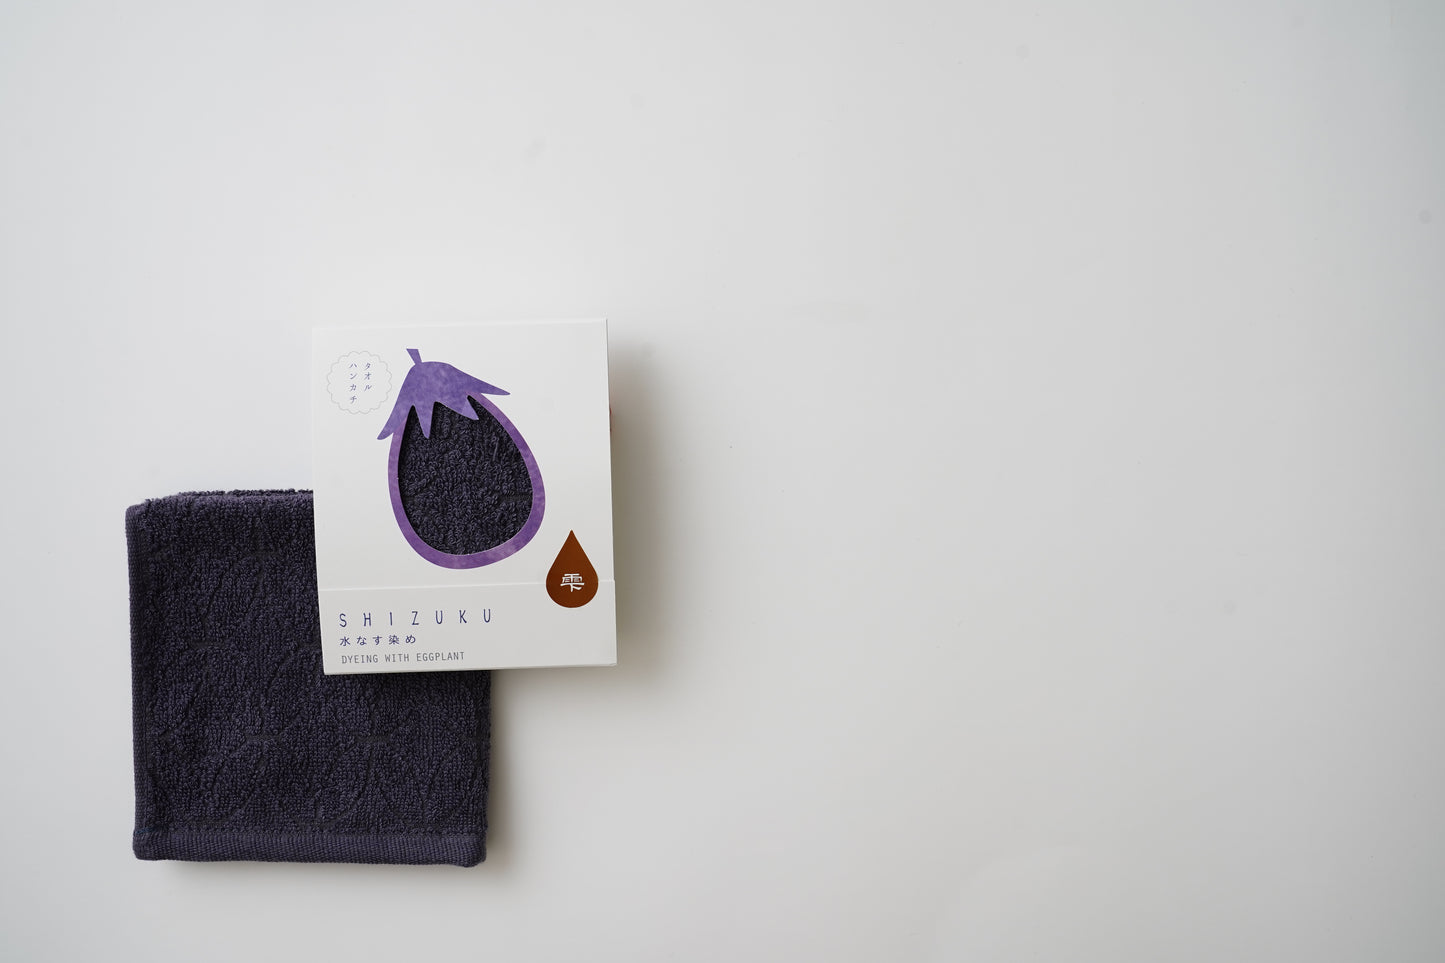 thies 1856 ® x Fukuroya Shizuku Handkerchief Pocket Towel natural dyed eggplant dusky purple